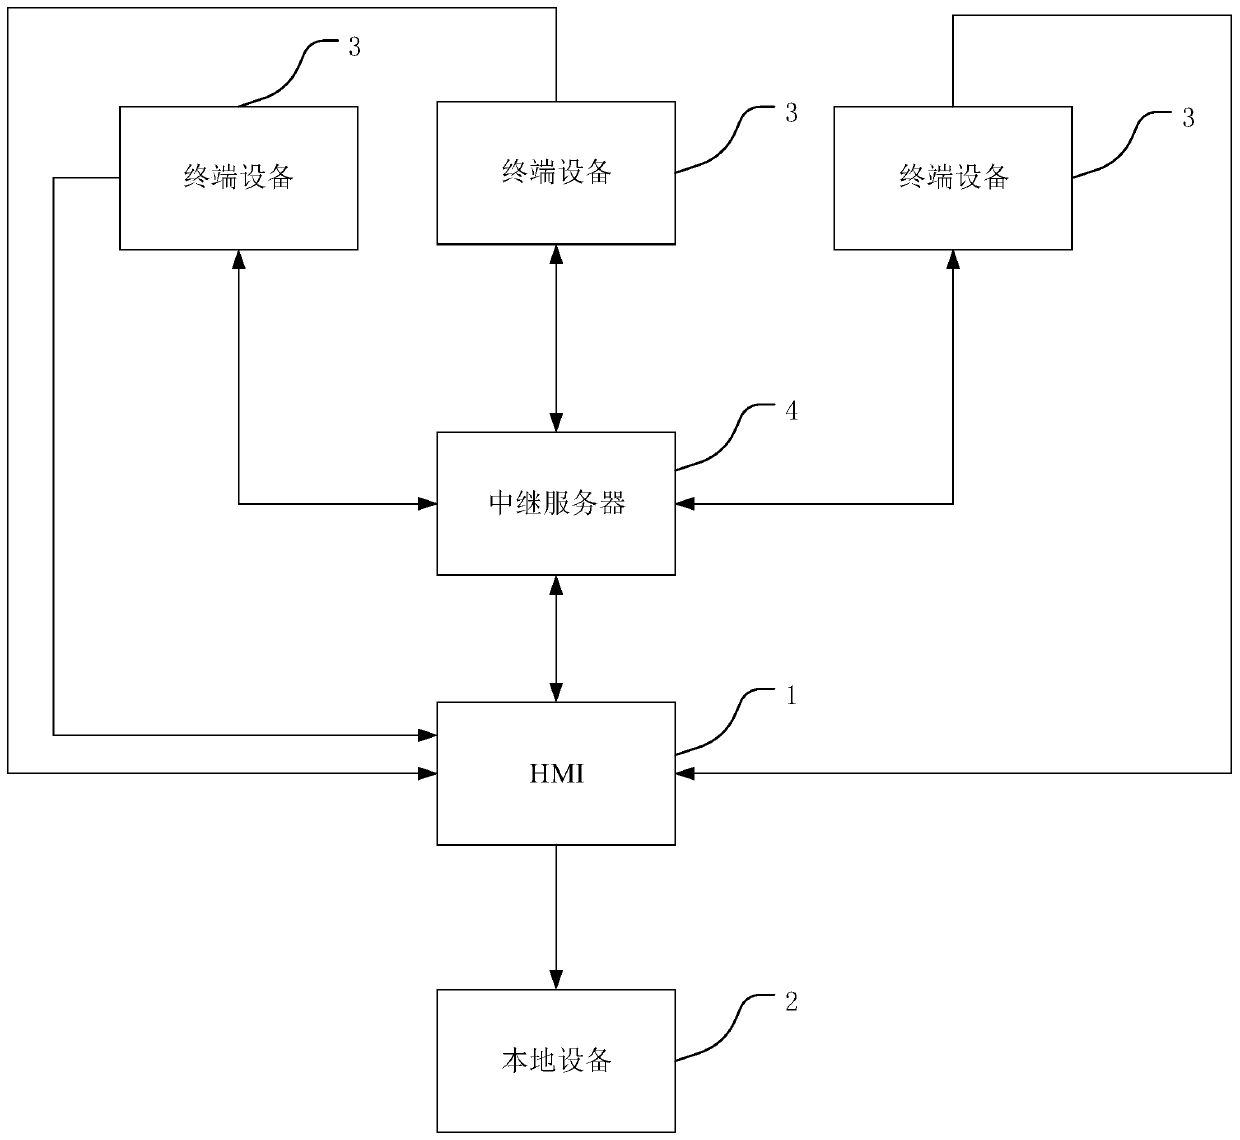 An HMI configuration synchronization system and method